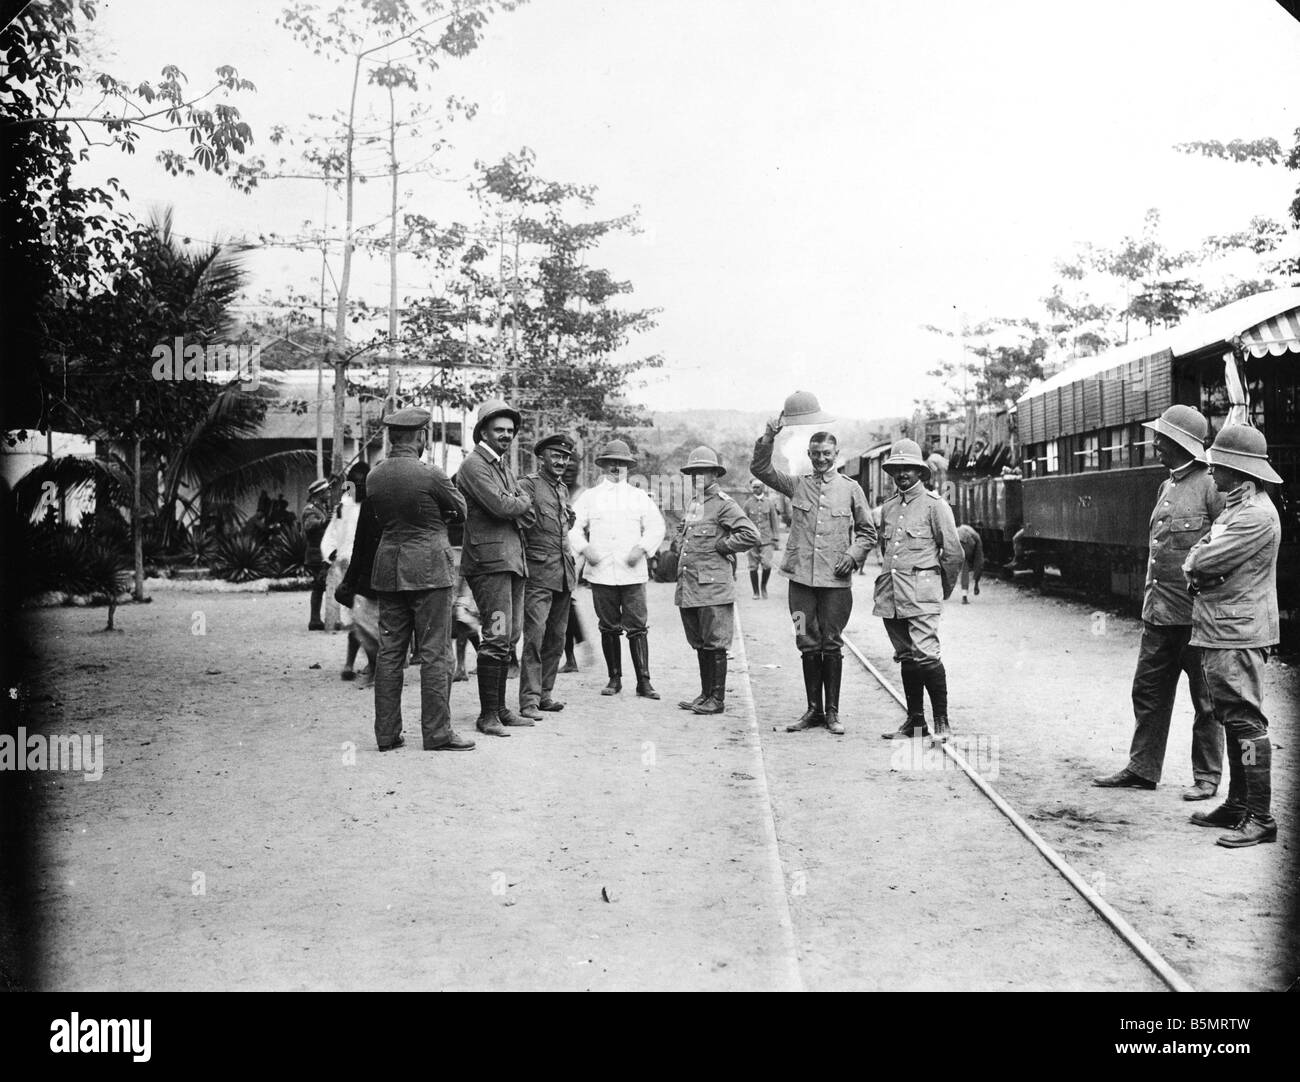 9AF 1914 0 0 A4 3 Stazione in tedesco in Africa orientale foto la prima guerra mondiale la guerra nelle colonie tedesche in Africa orientale oggi soldati Tanzania Foto Stock